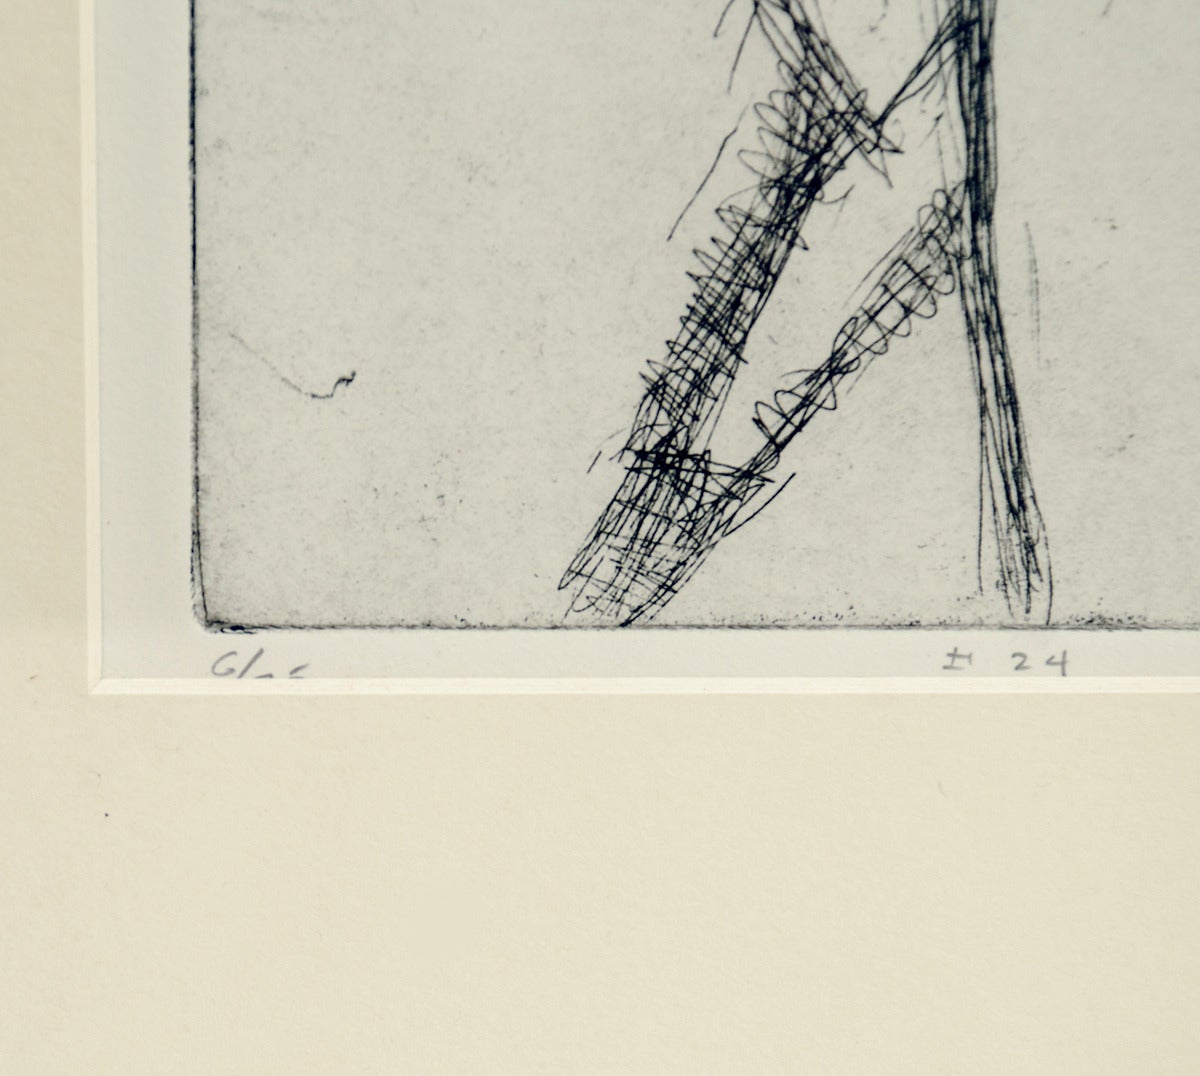 Paper Very Rare Original Richard Diebenkorn Drypoint Etching and Handbill, 1965